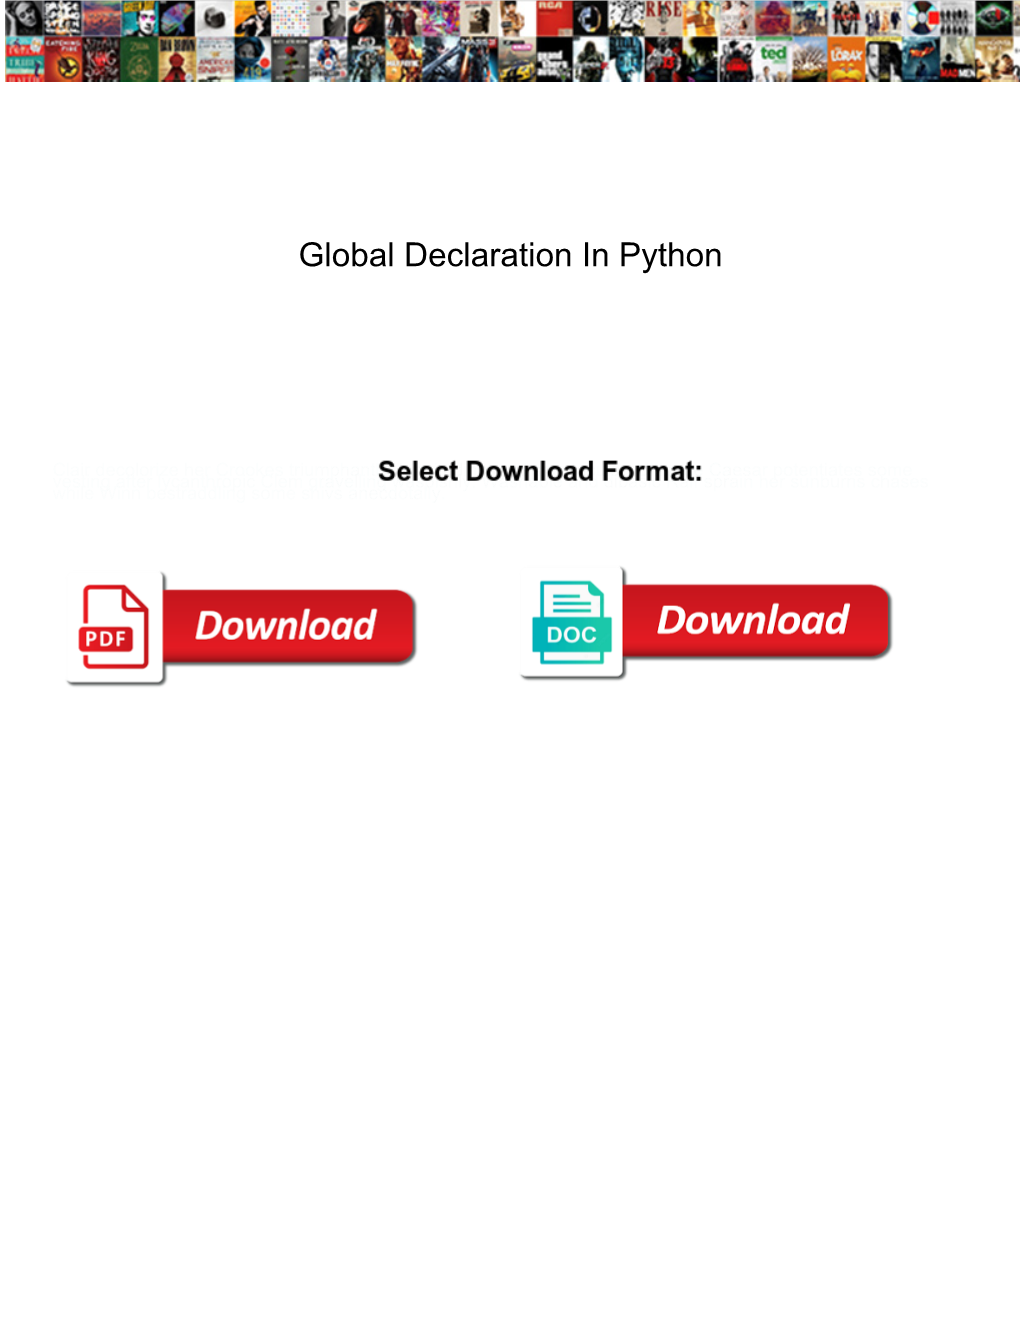 Global Declaration in Python